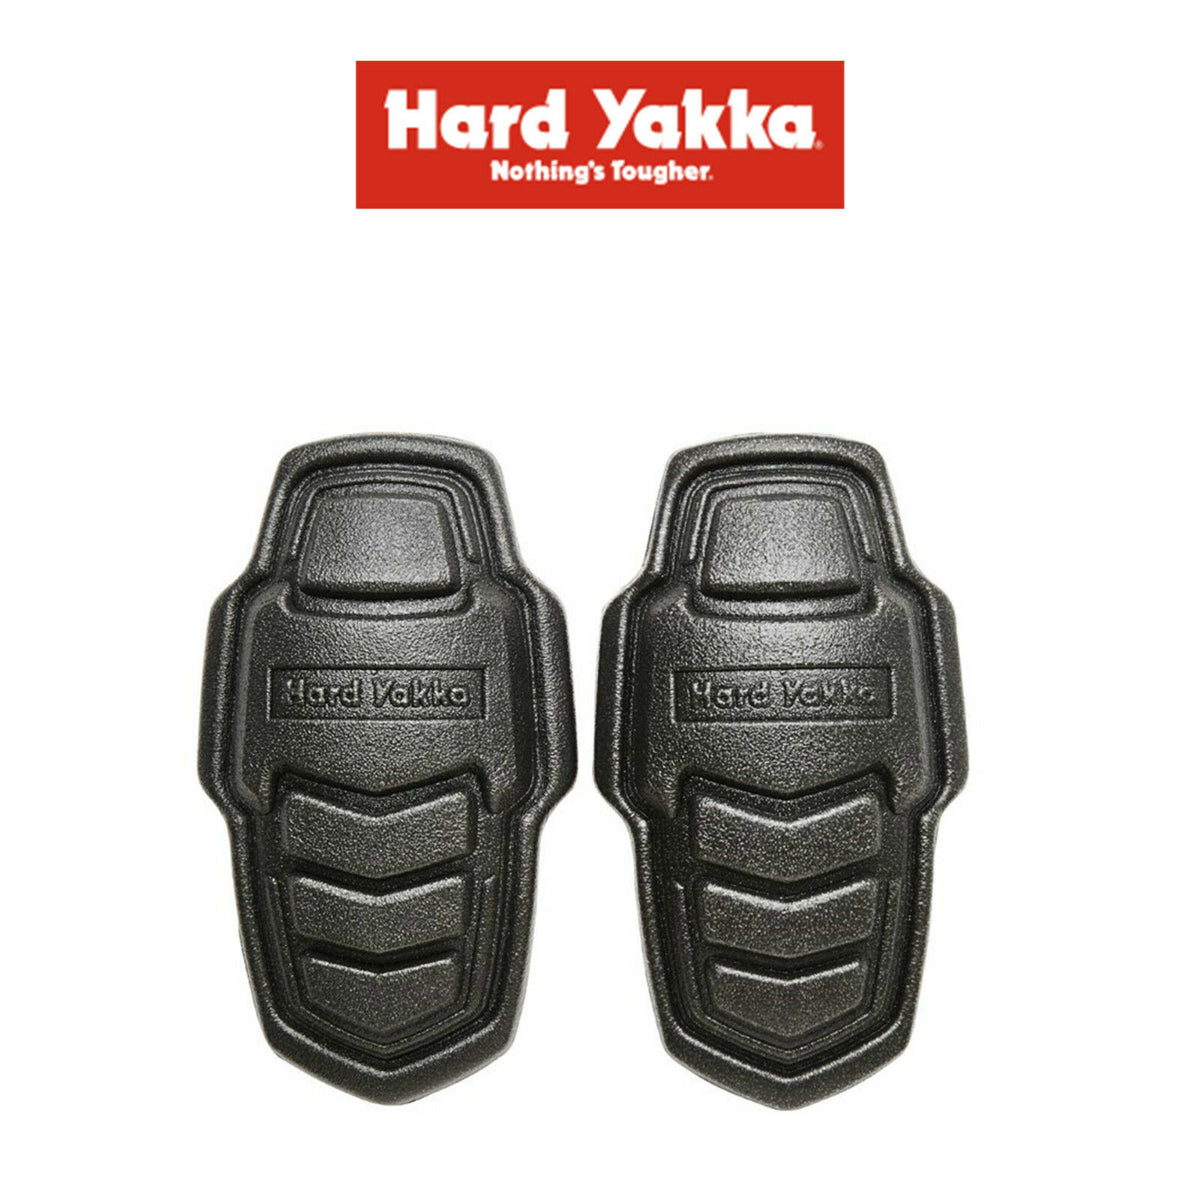 Hard Yakka, FR Knee pad inserts, Y22670 - NZ Safety Blackwoods